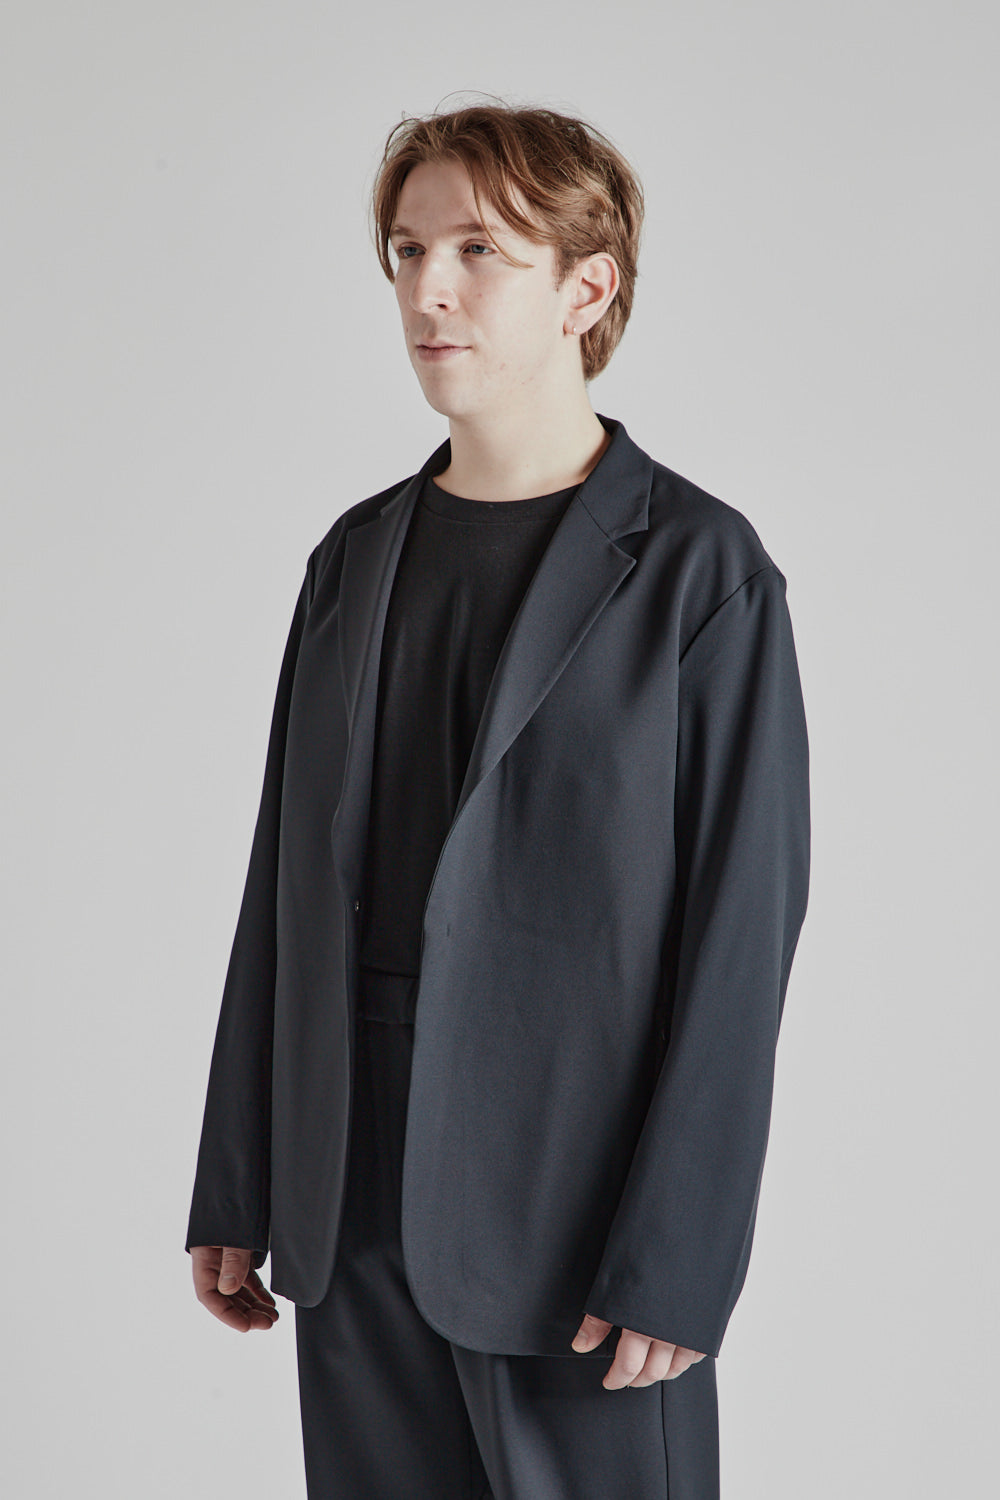 ALLTERRAIN I/O Tech Tailored Jacket in Black